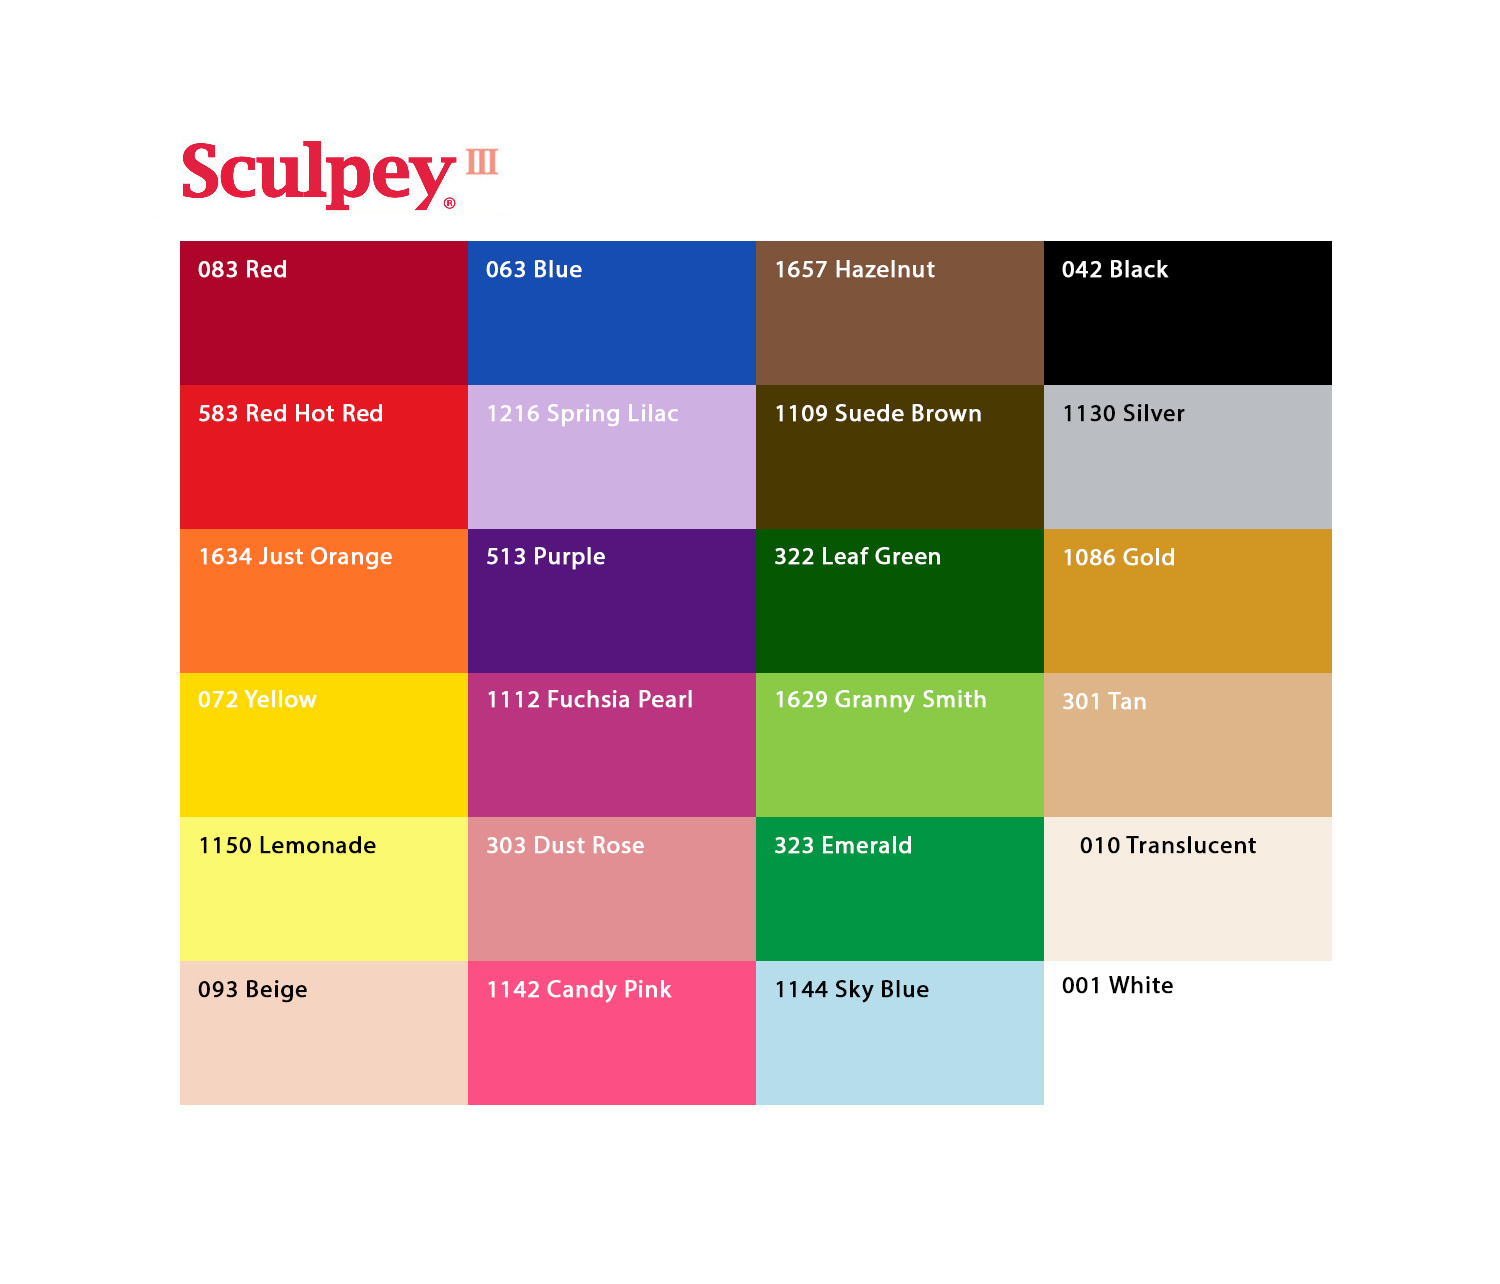 Sculpey Super Non-Toxic Semi-Transparent Polymer Clay, 1 lb, Beige Pink  715891114315